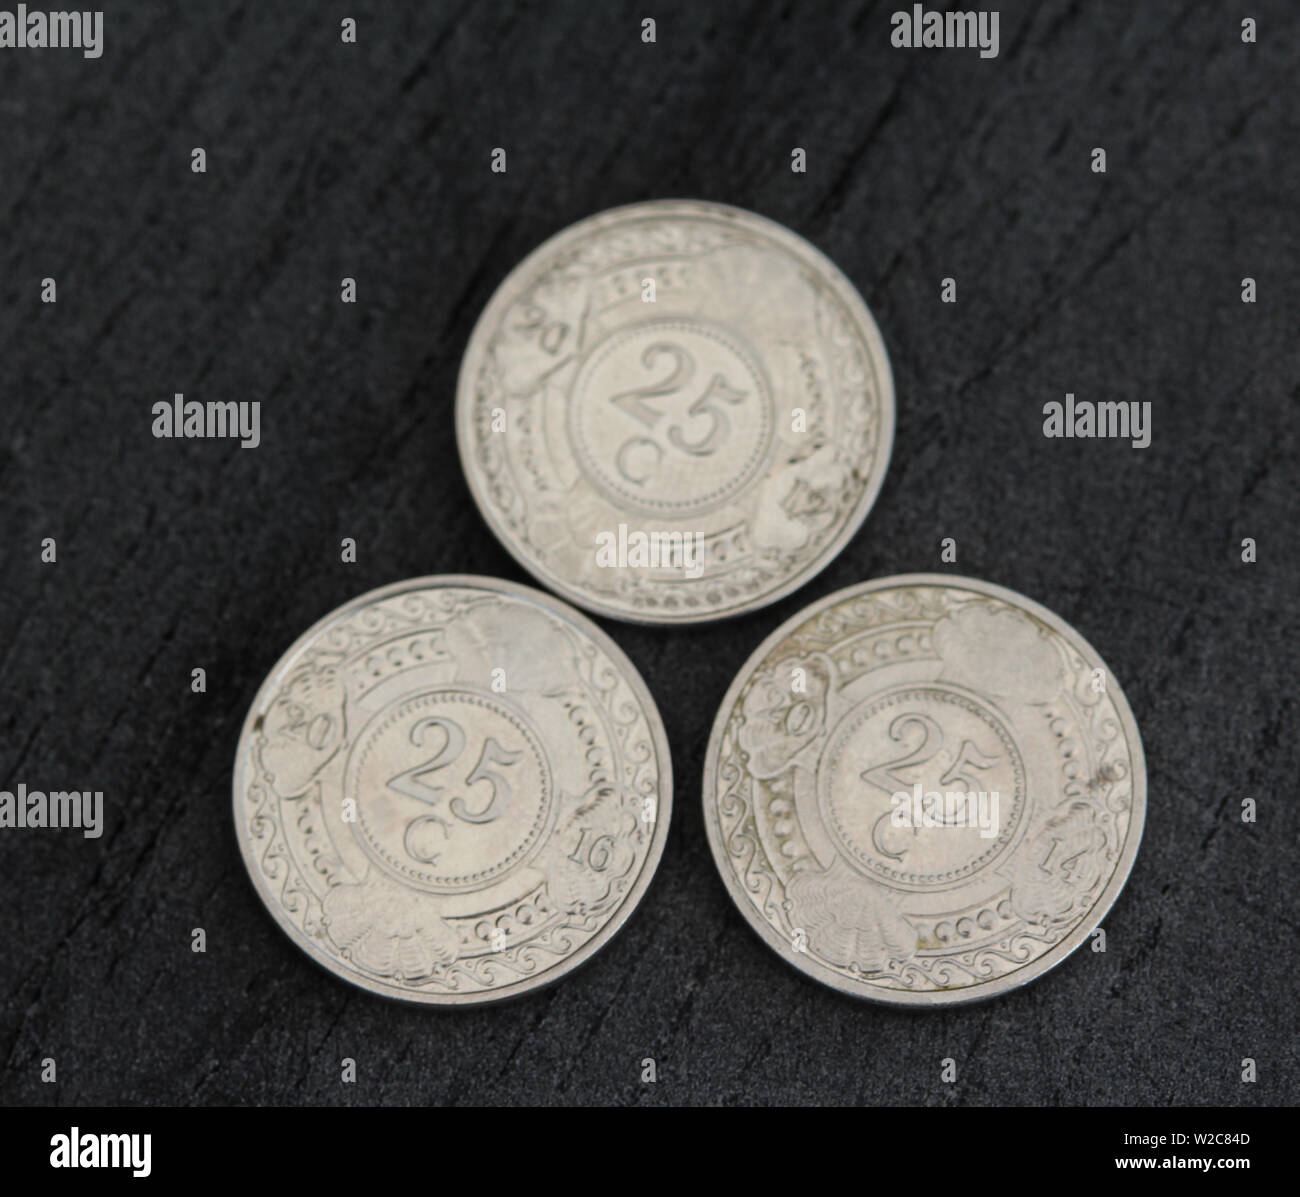 close up of 25 (twenty five) cent Netherlands Antillean guilder coin on black background Stock Photo